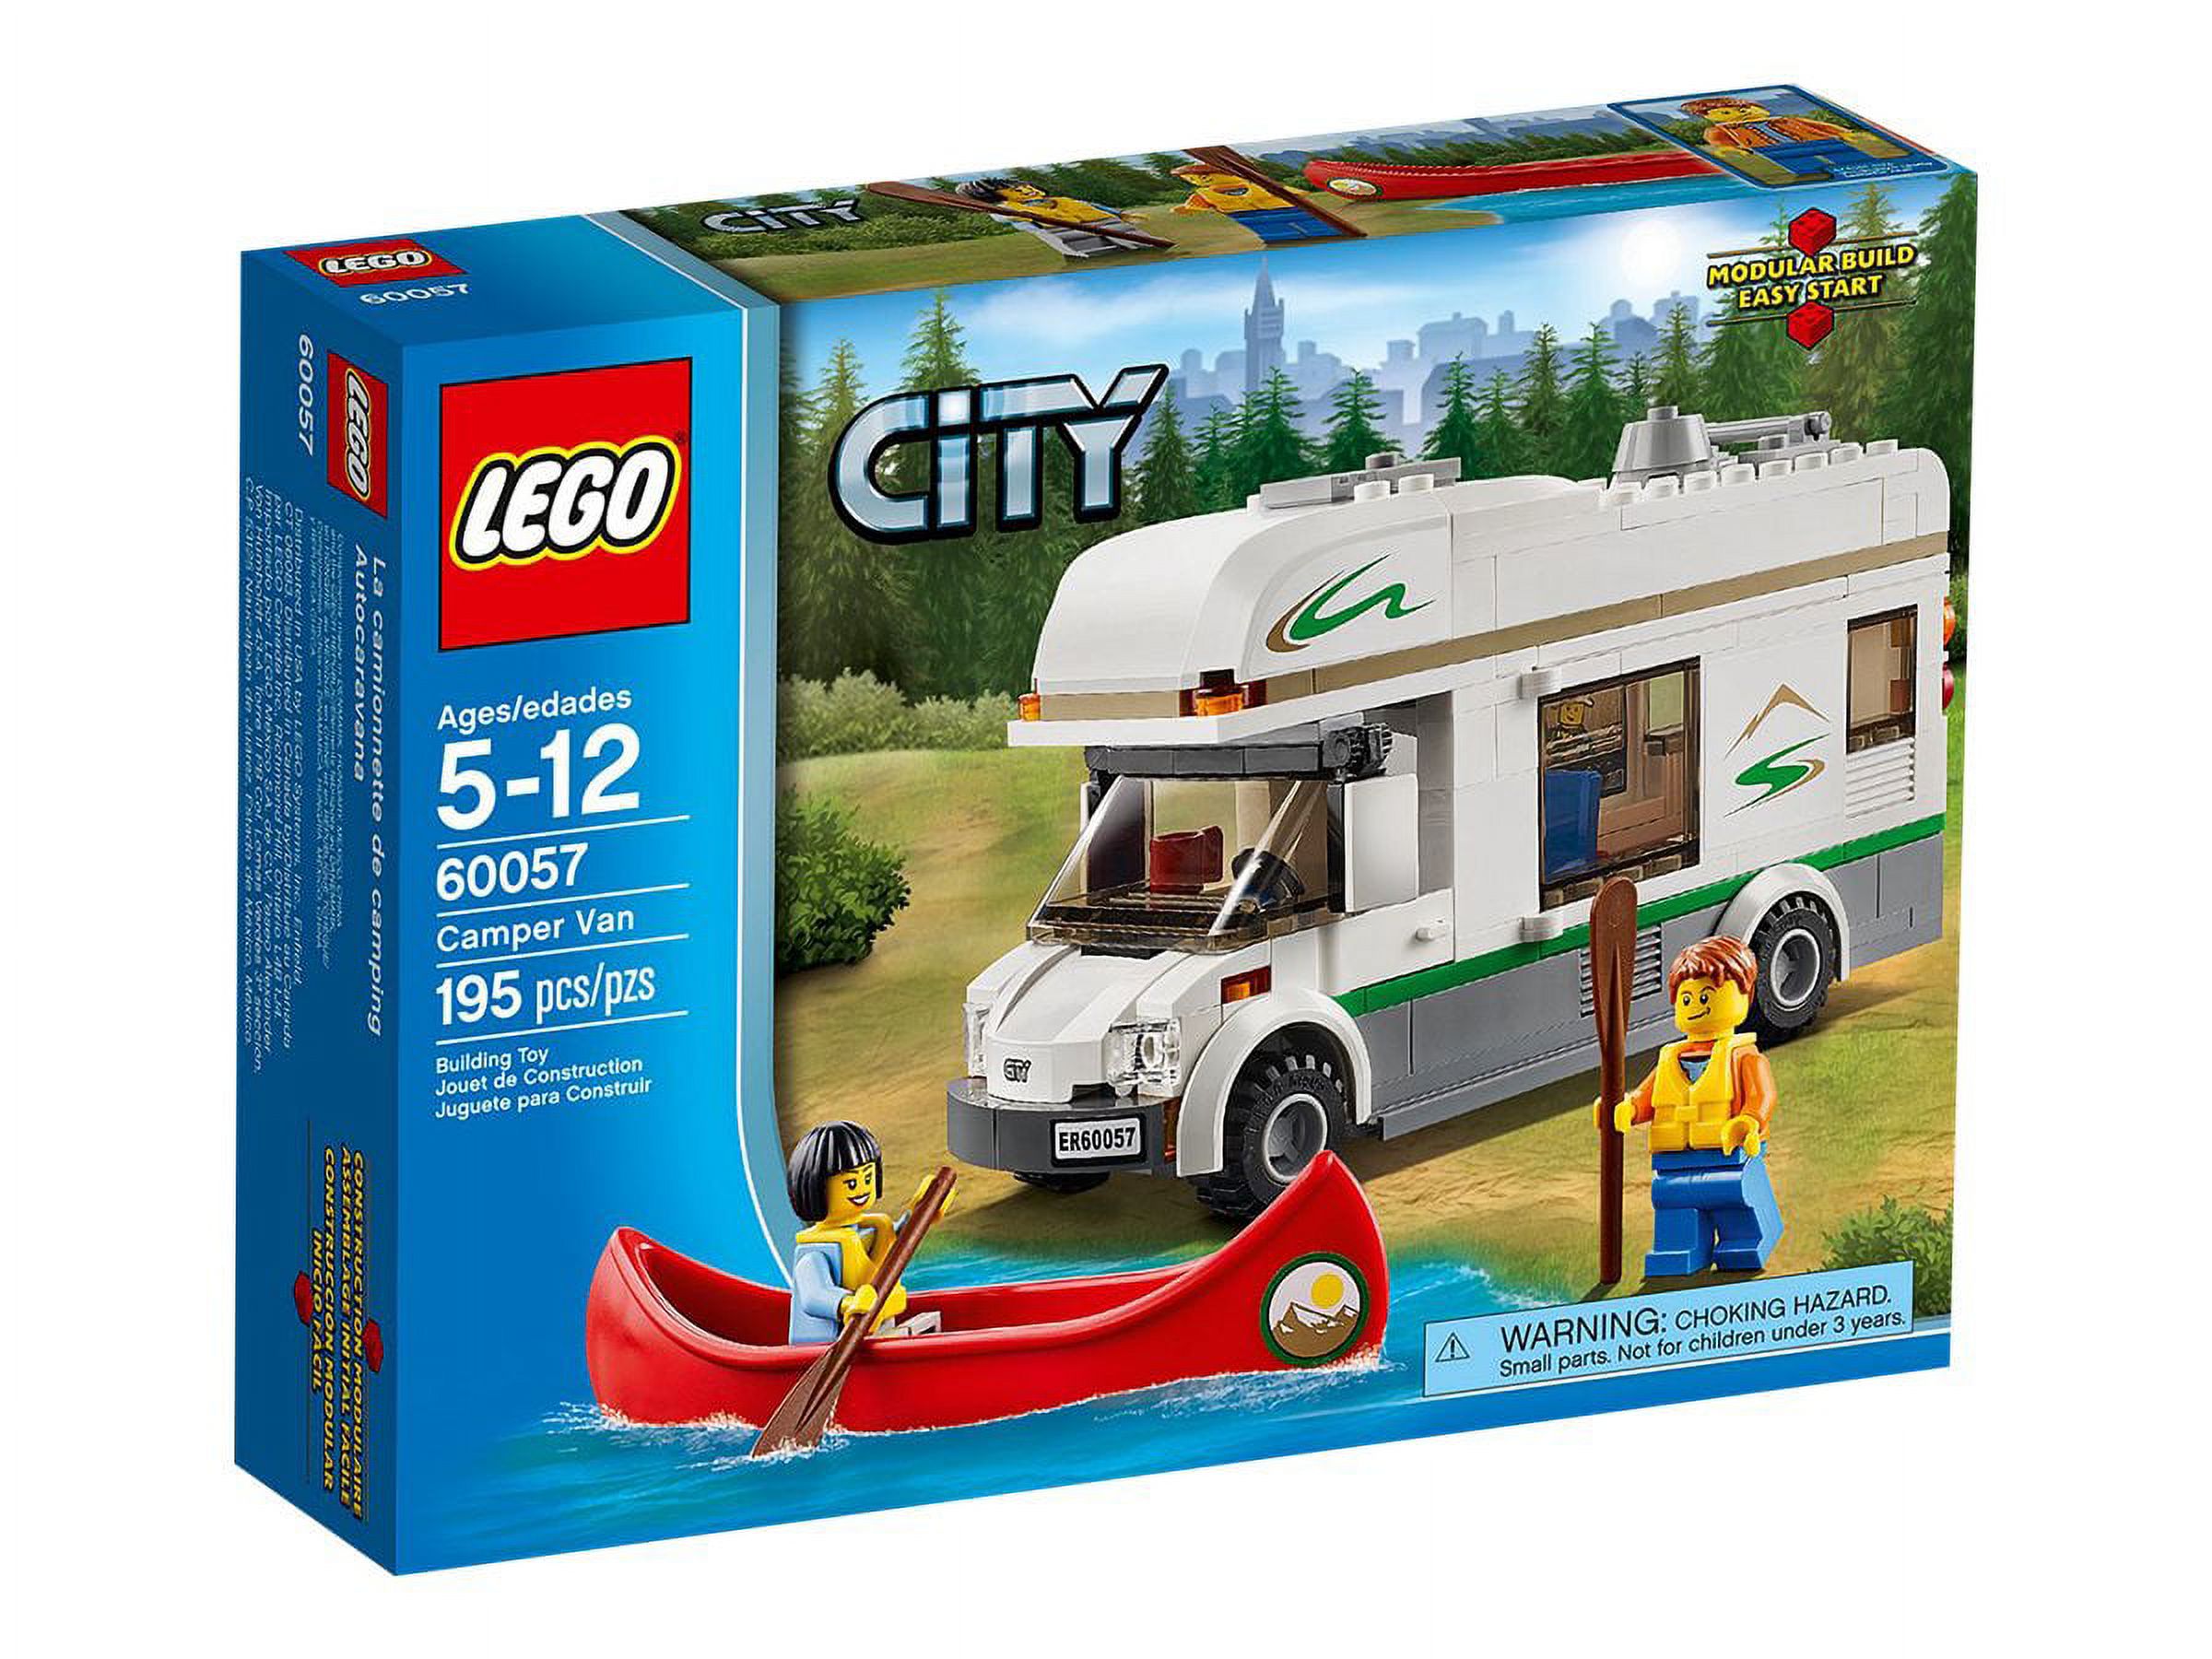 LEGO City Great Vehicles Camper Van Building Set - image 4 of 7